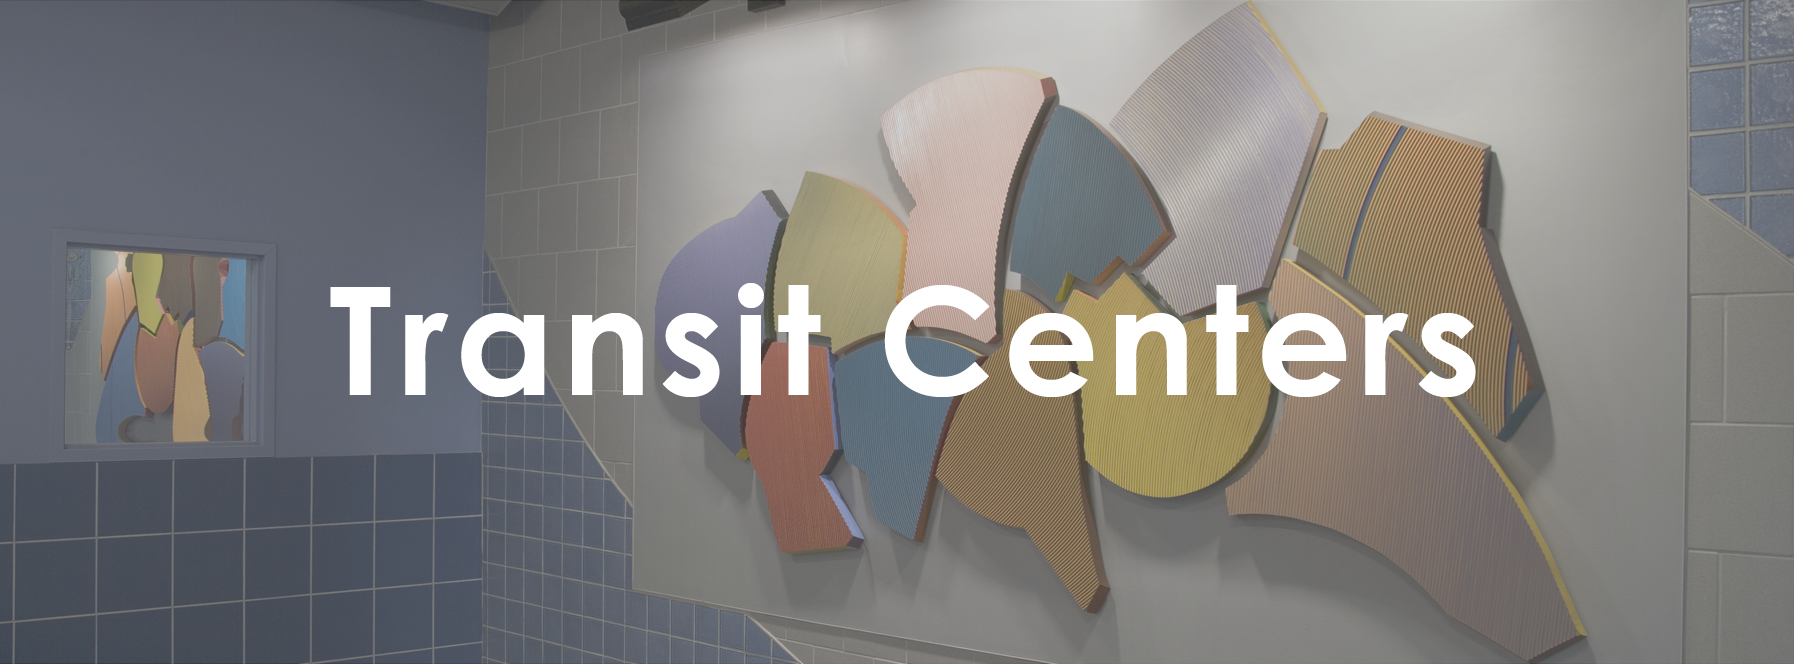 Transit Centers Header